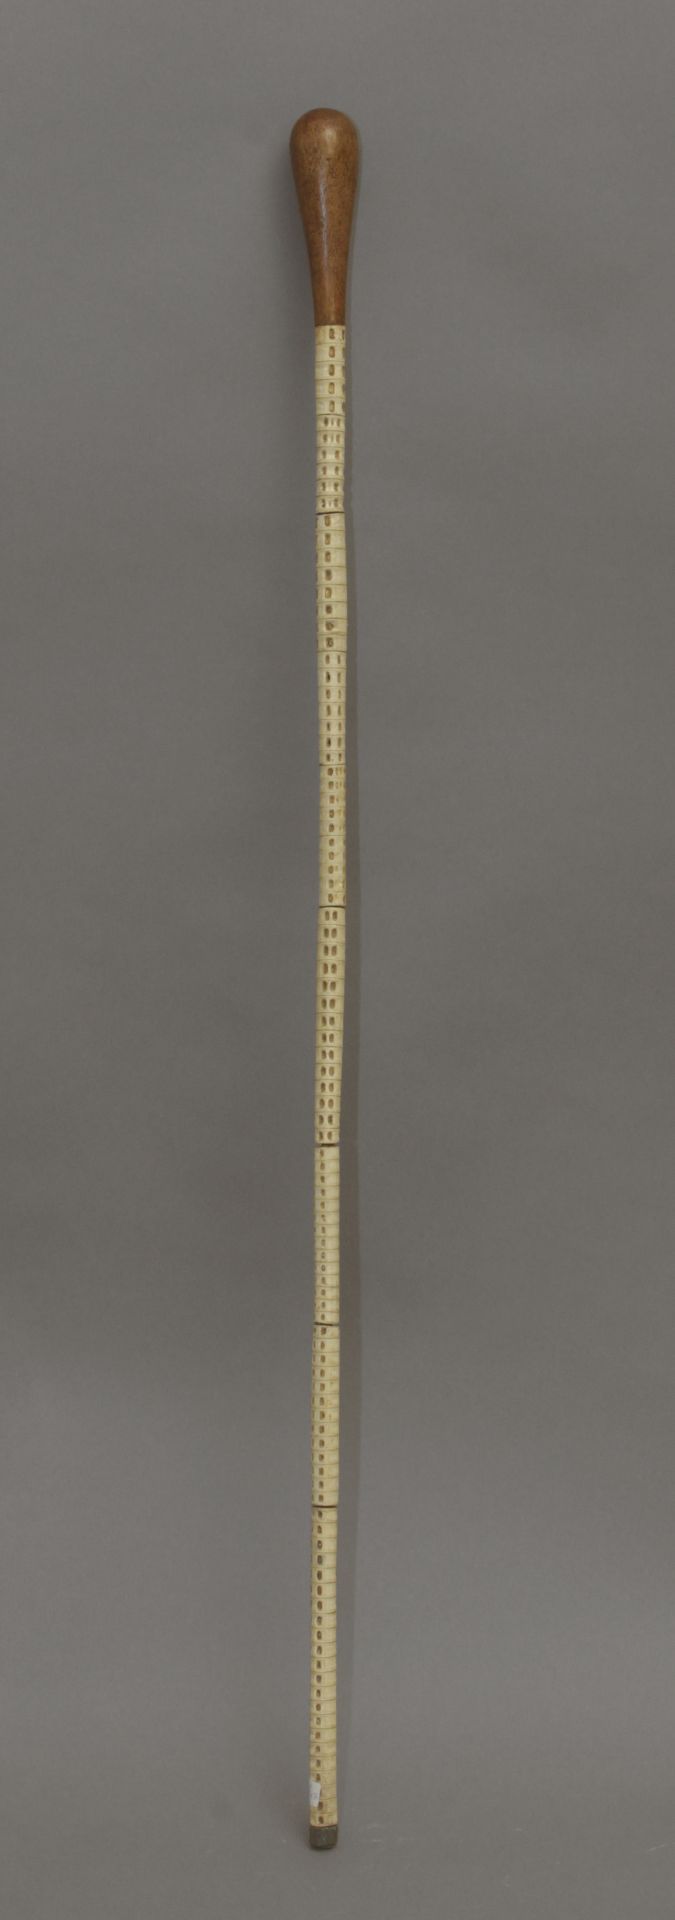 An early 20th century marine knob handled cane - Image 2 of 3